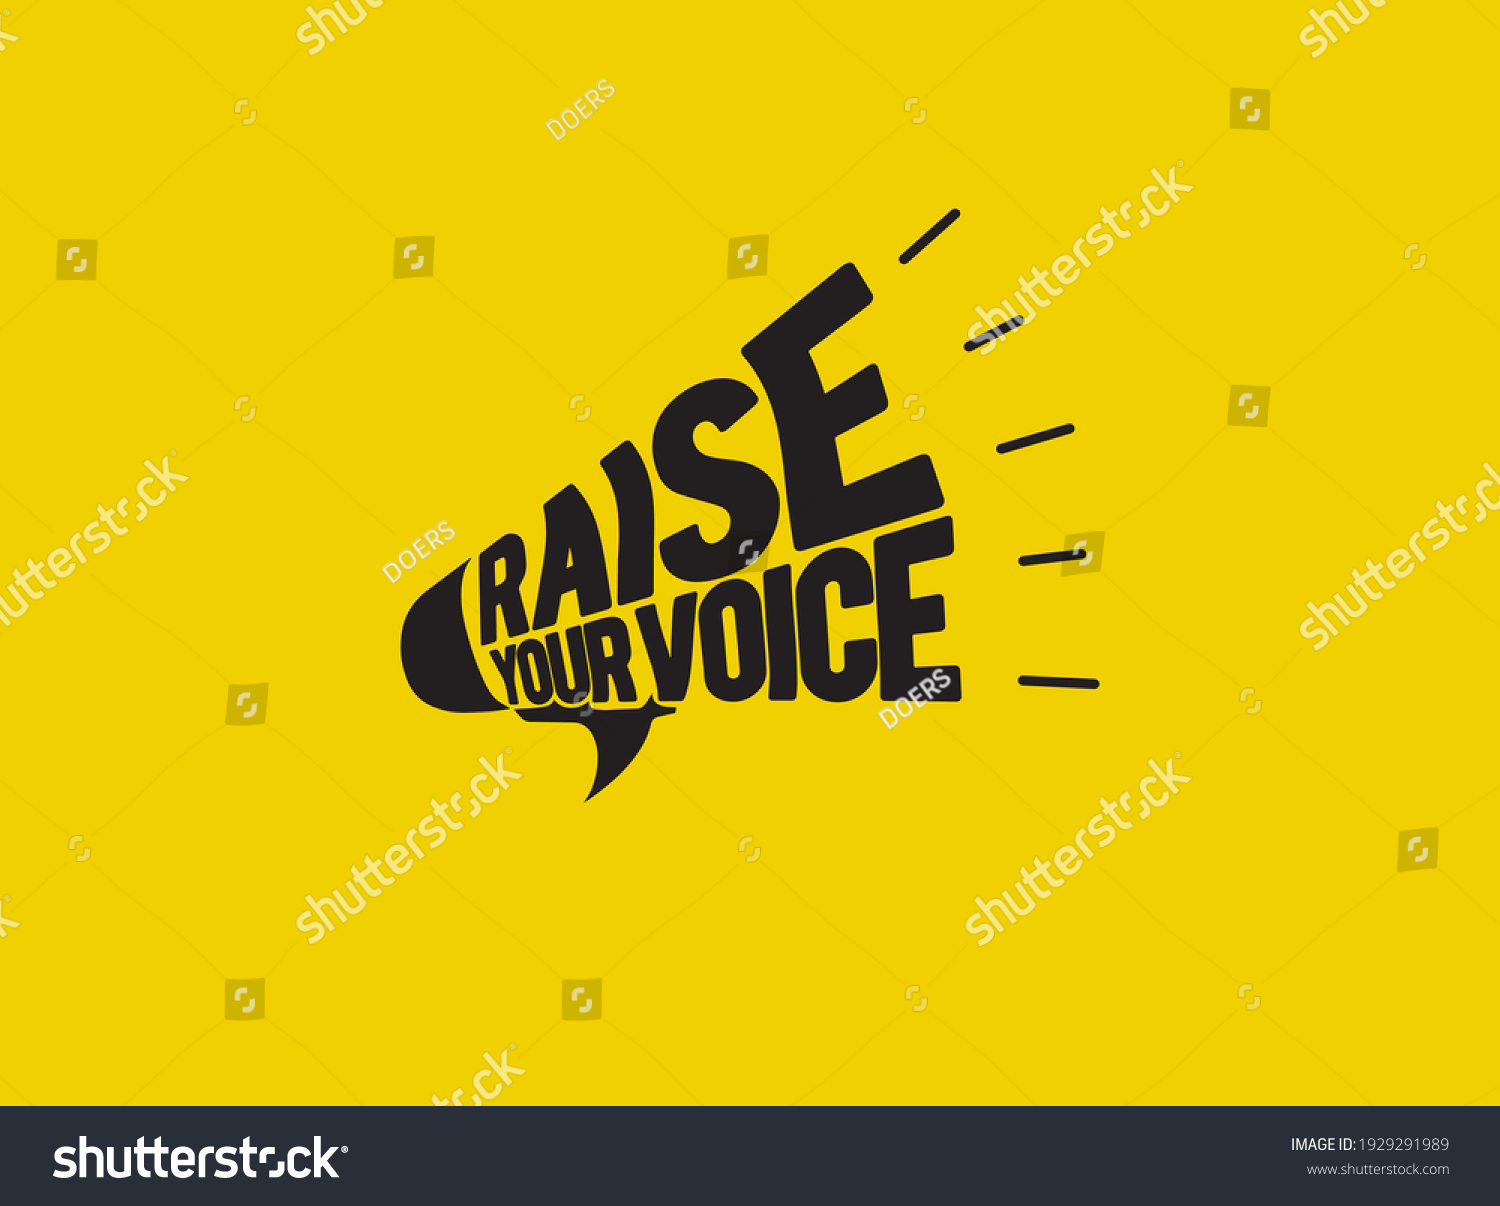 Raise Your Voice Vector Logo Illustration Stock Vector Royalty Free 1929291989 Shutterstock